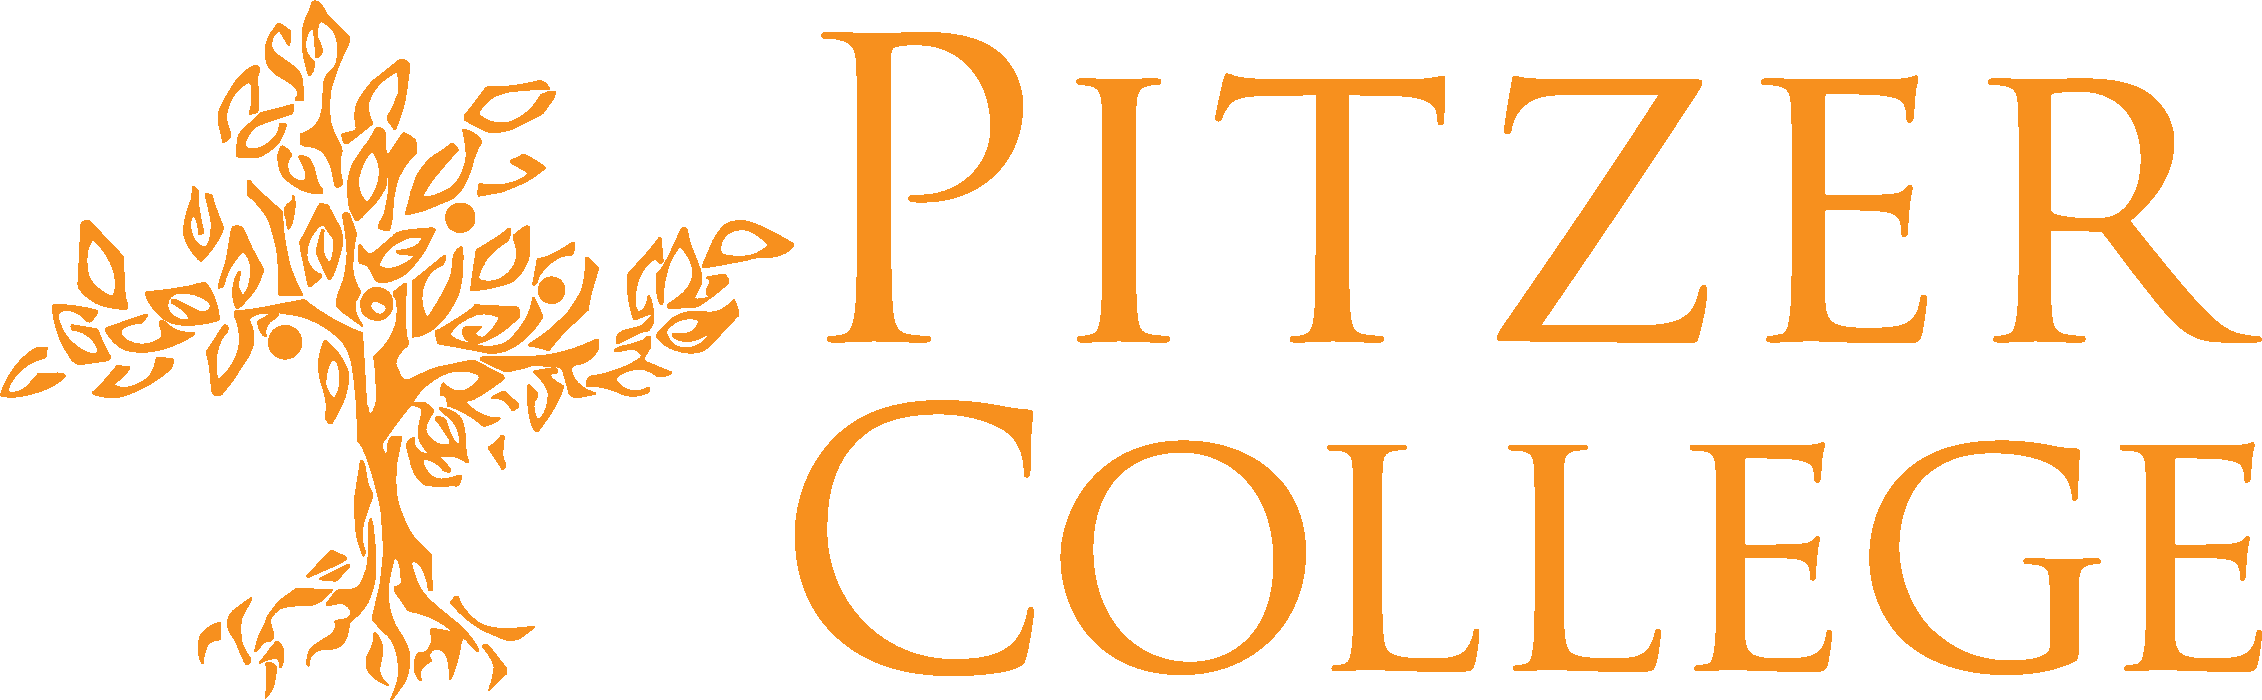 pitzer college logo